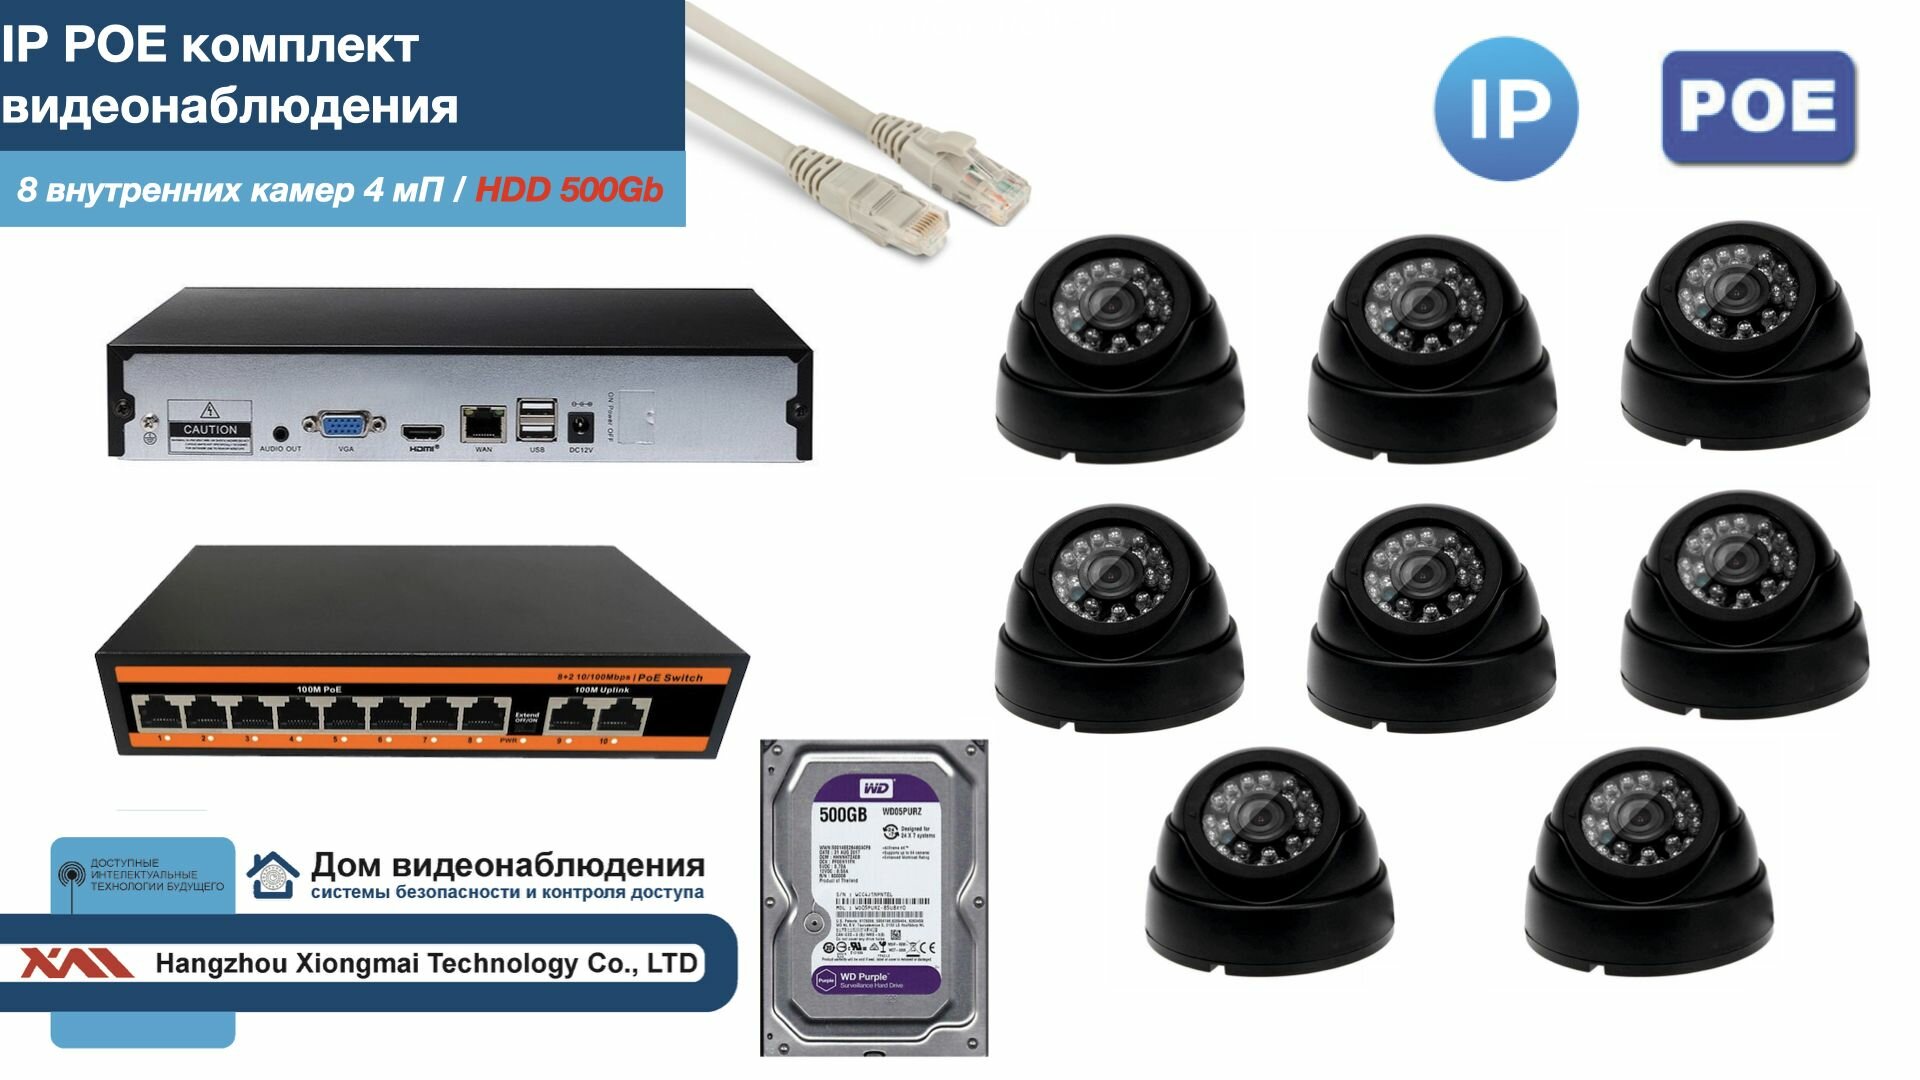 Полный IP POE комплект видеонаблюдения на 8 камер (KIT8IPPOE300B4MP-HDD500Gb)